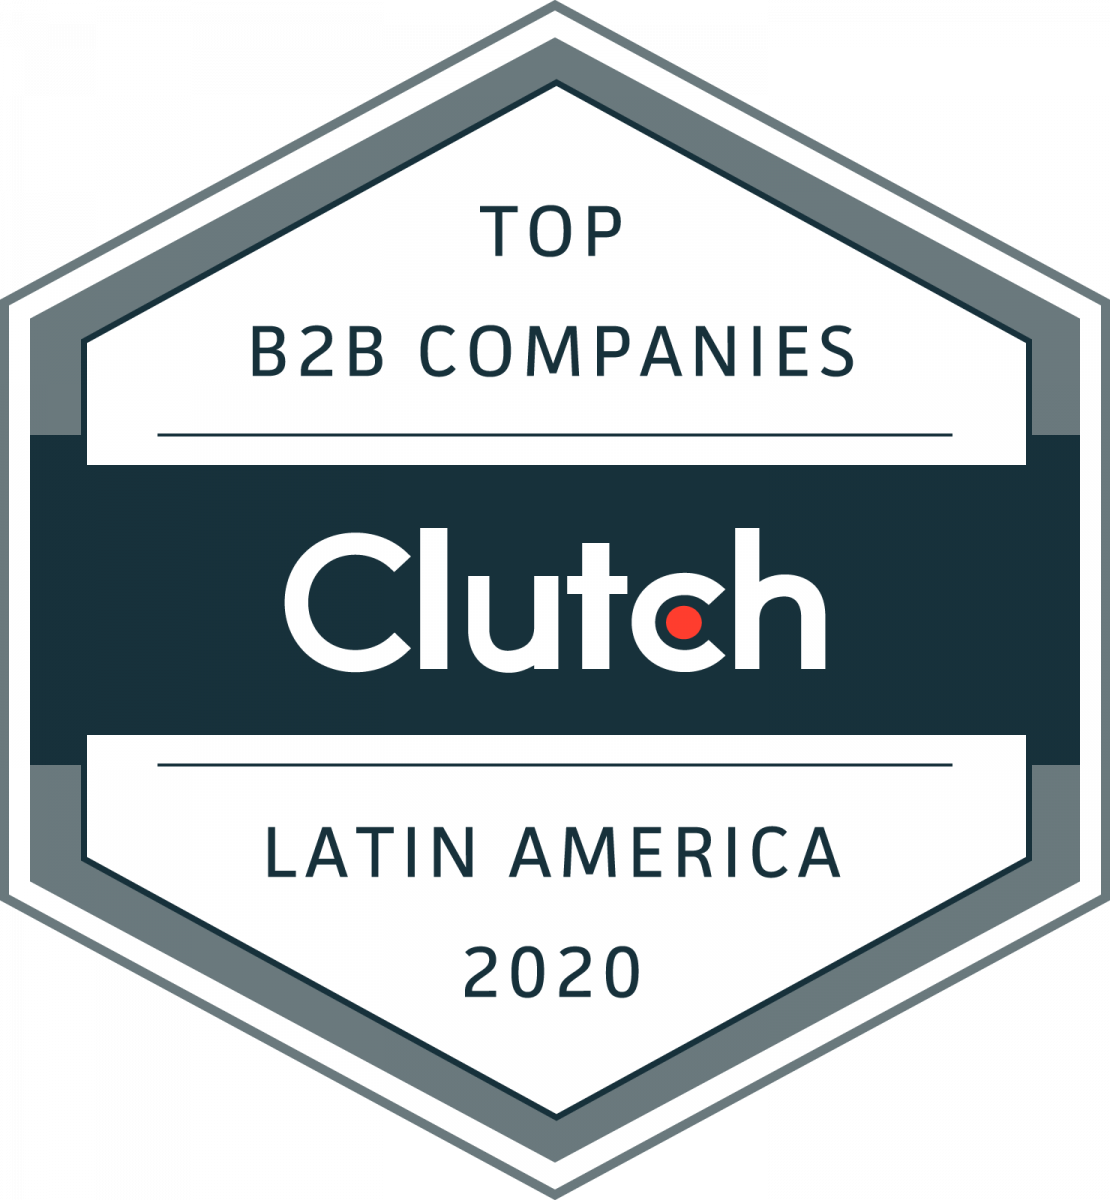 Top B2B Company Clutch Latin America 2020 - Design Company